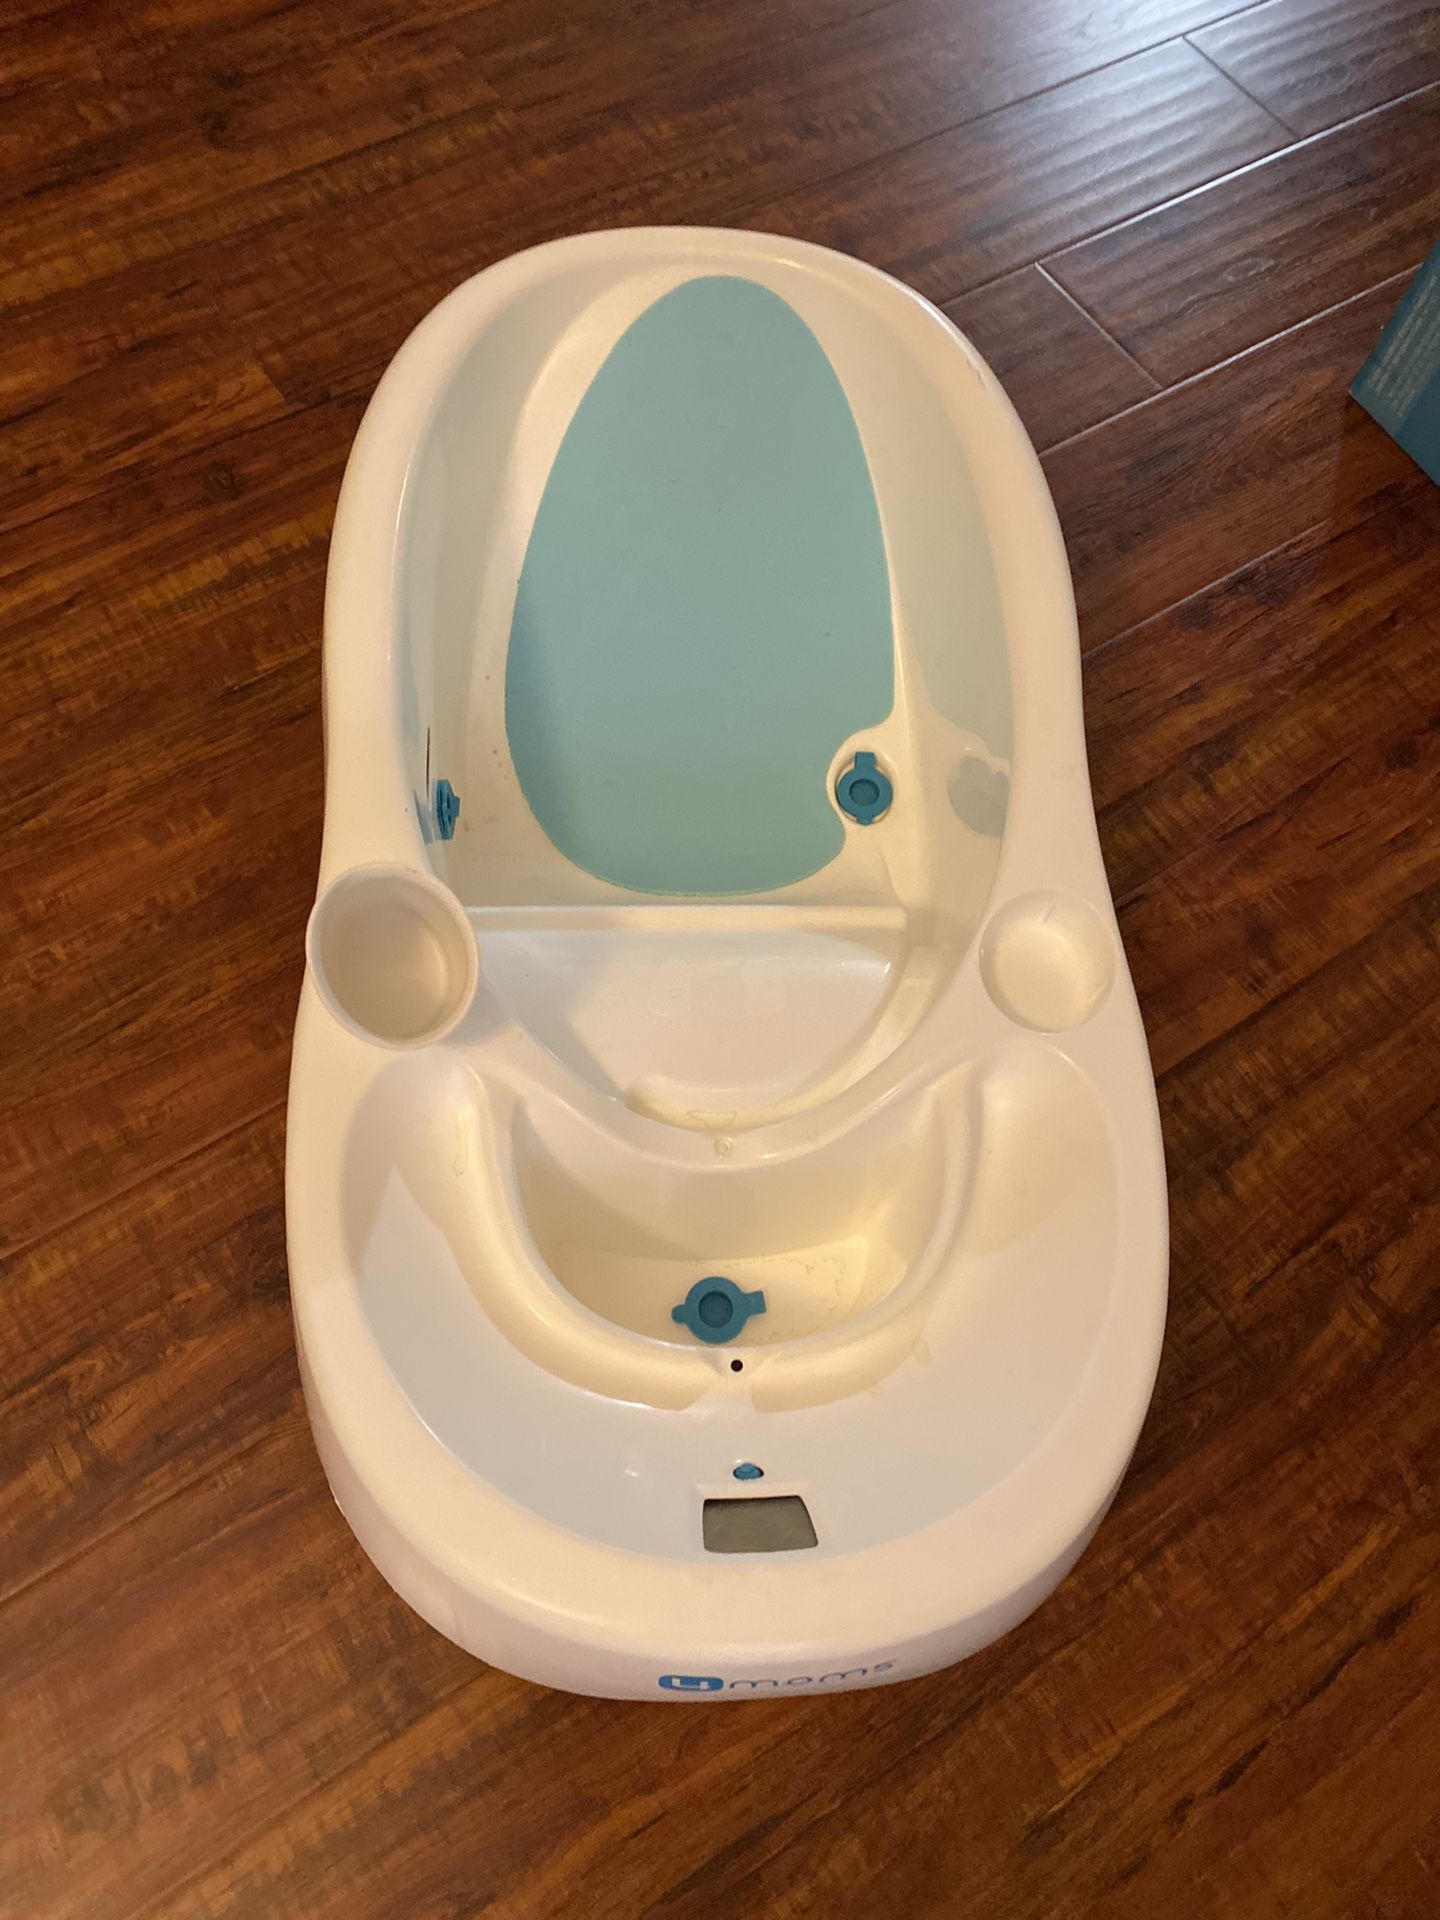 4moms infant tub